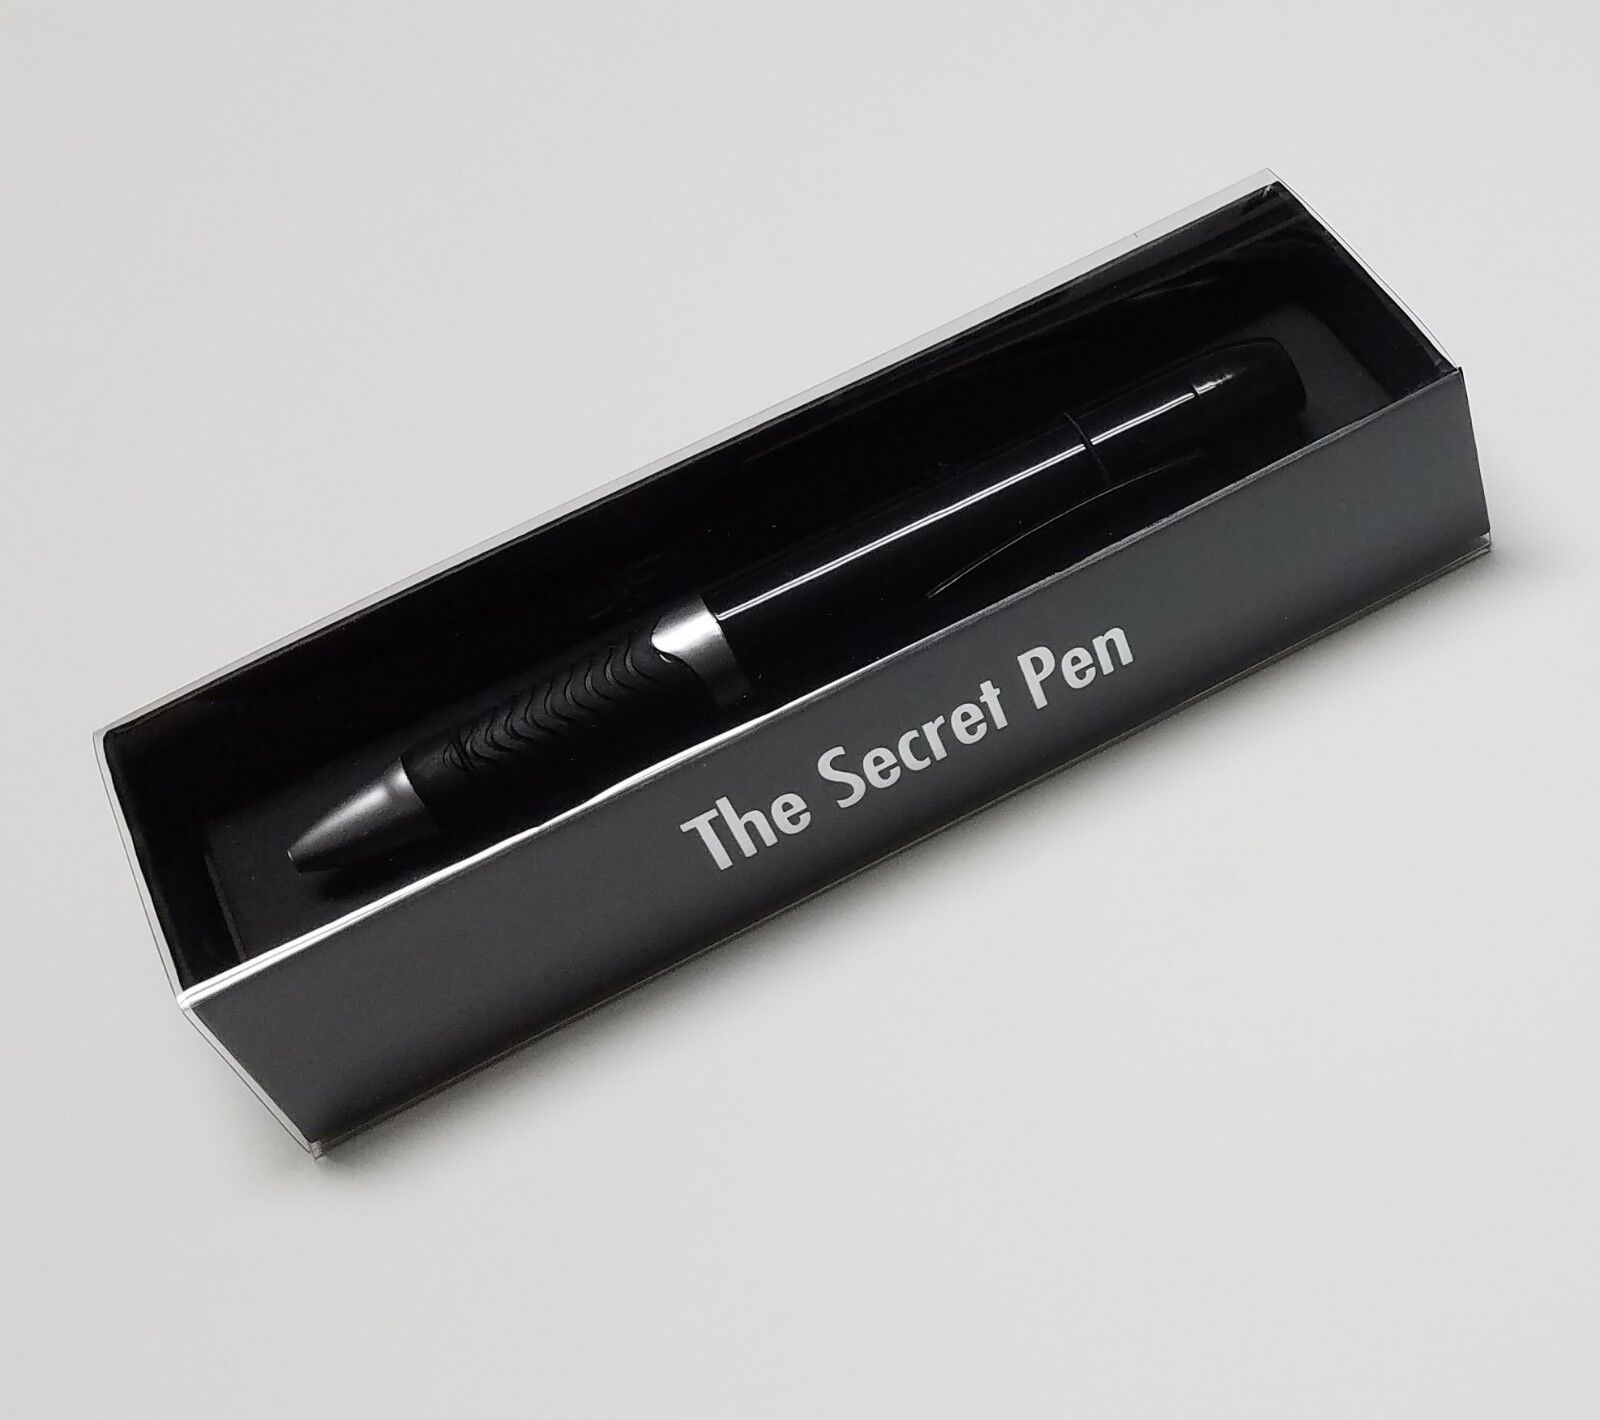 The Secret Pen - A Pen With A Hidden Compartment